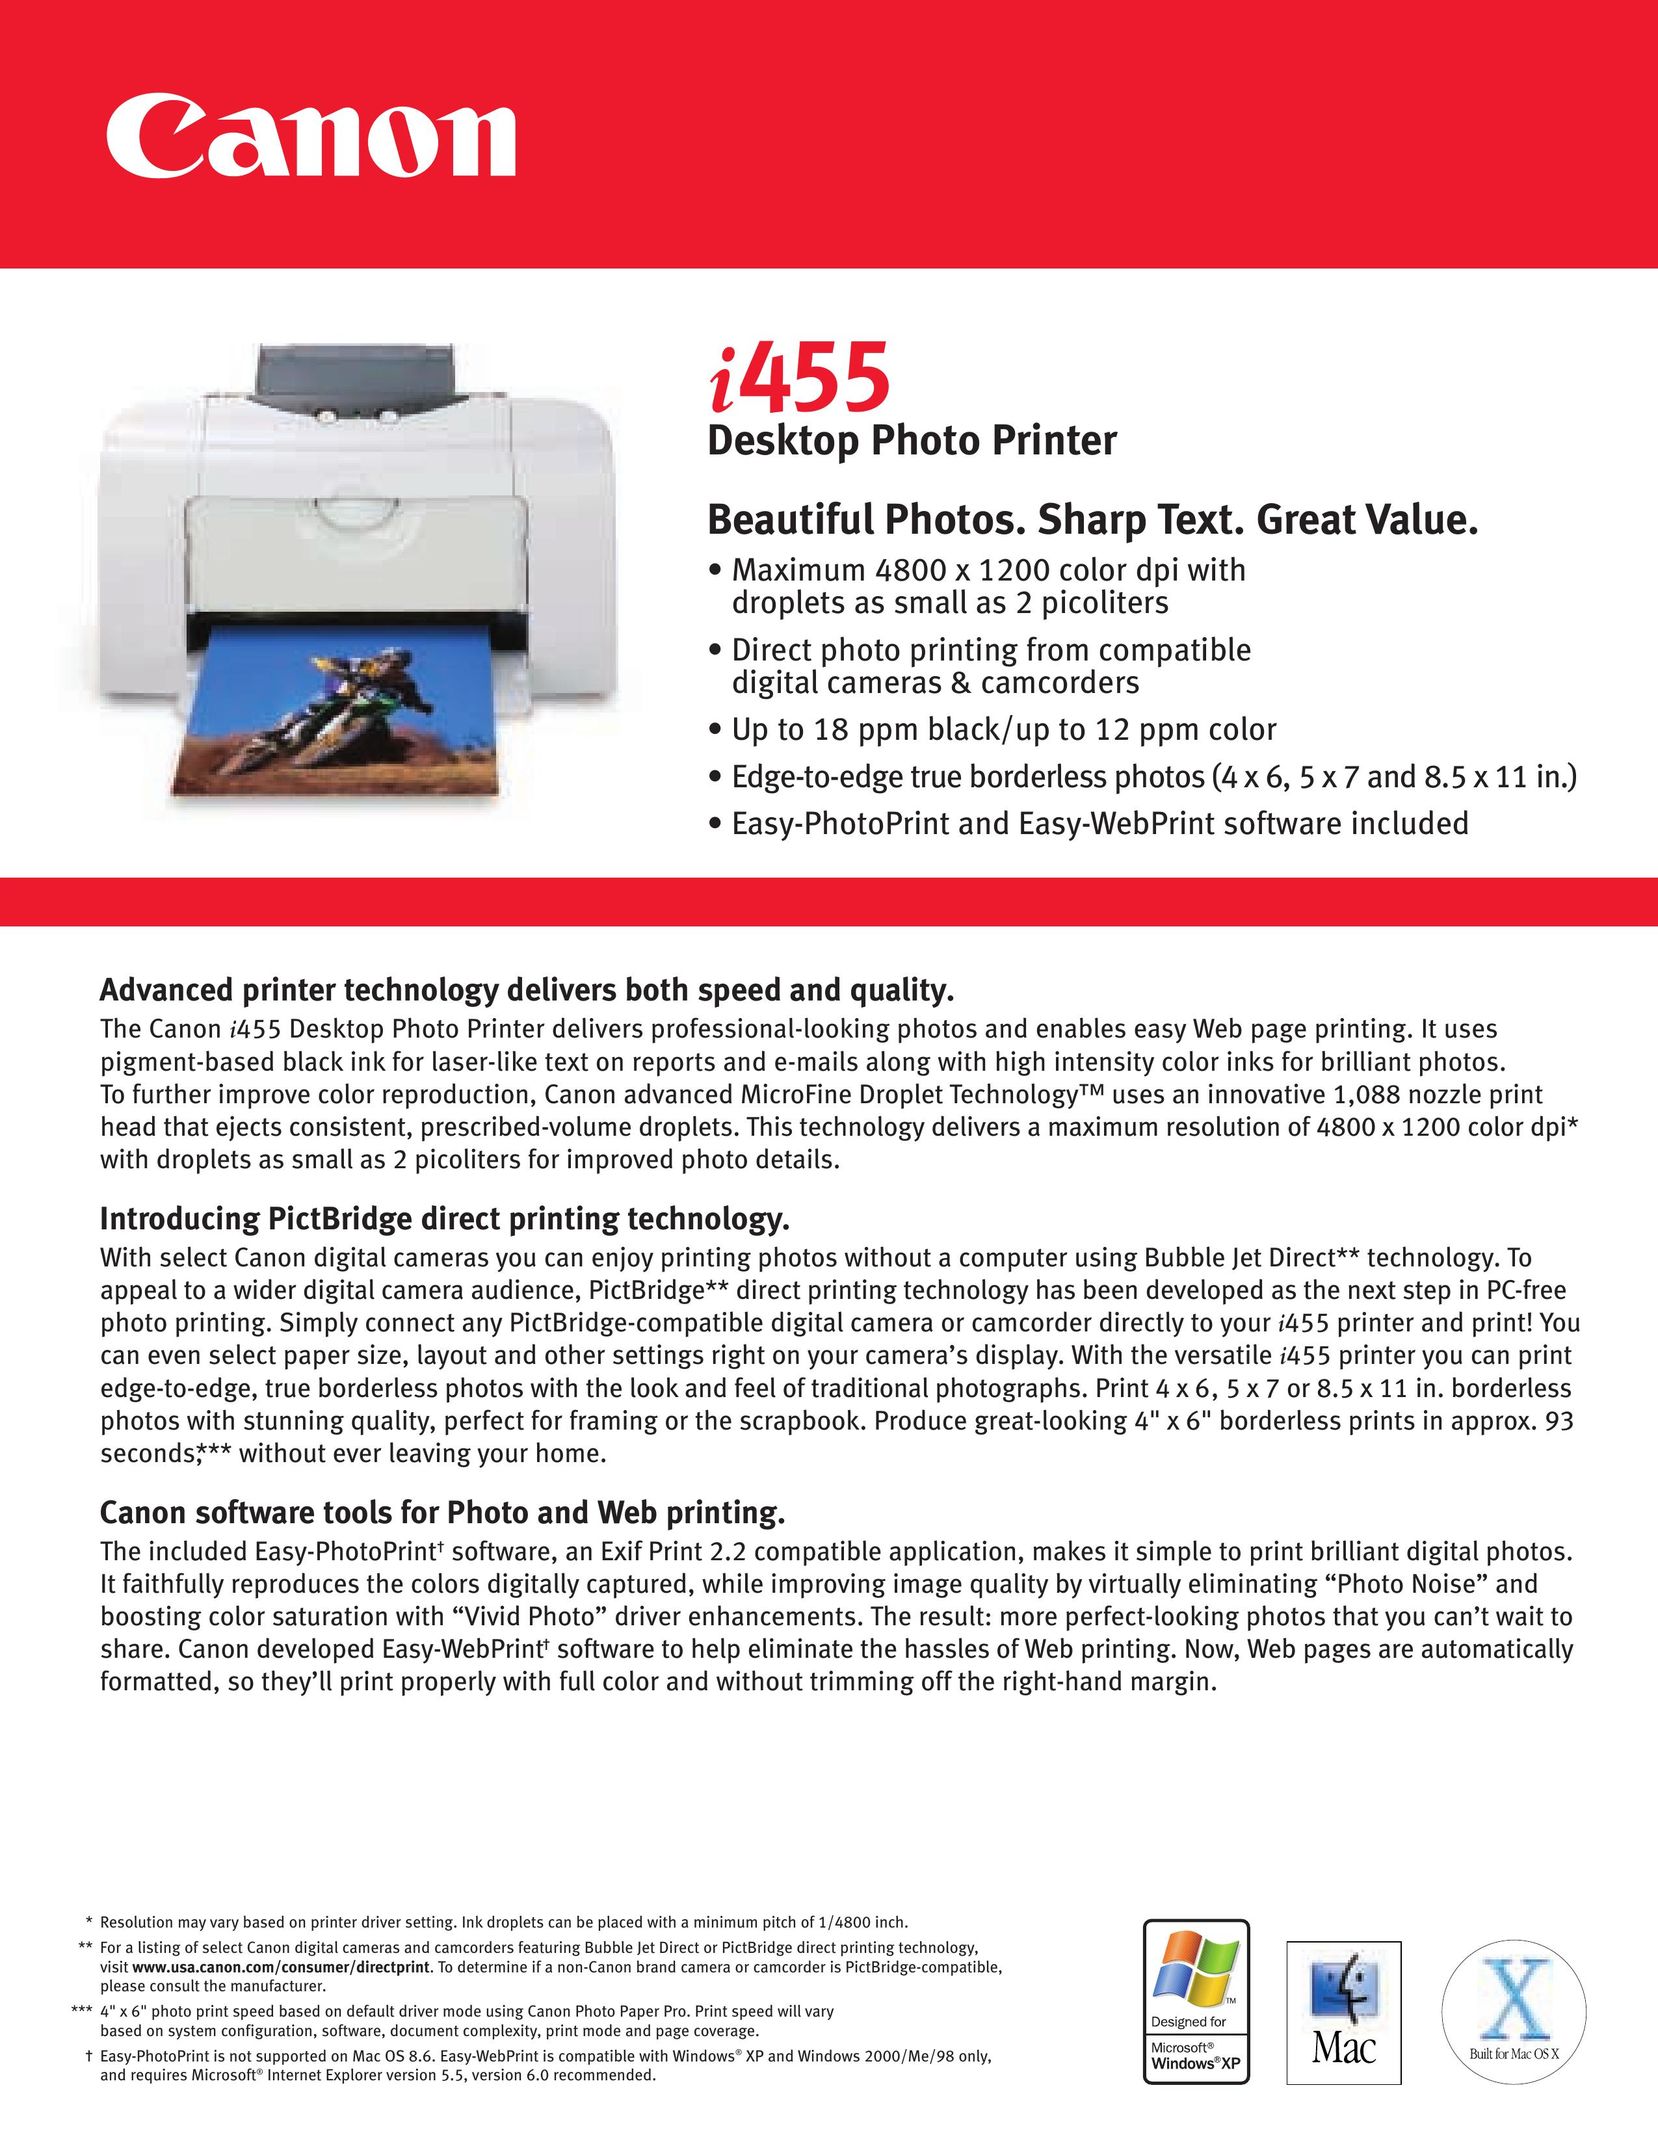 Canon 455 Printer User Manual